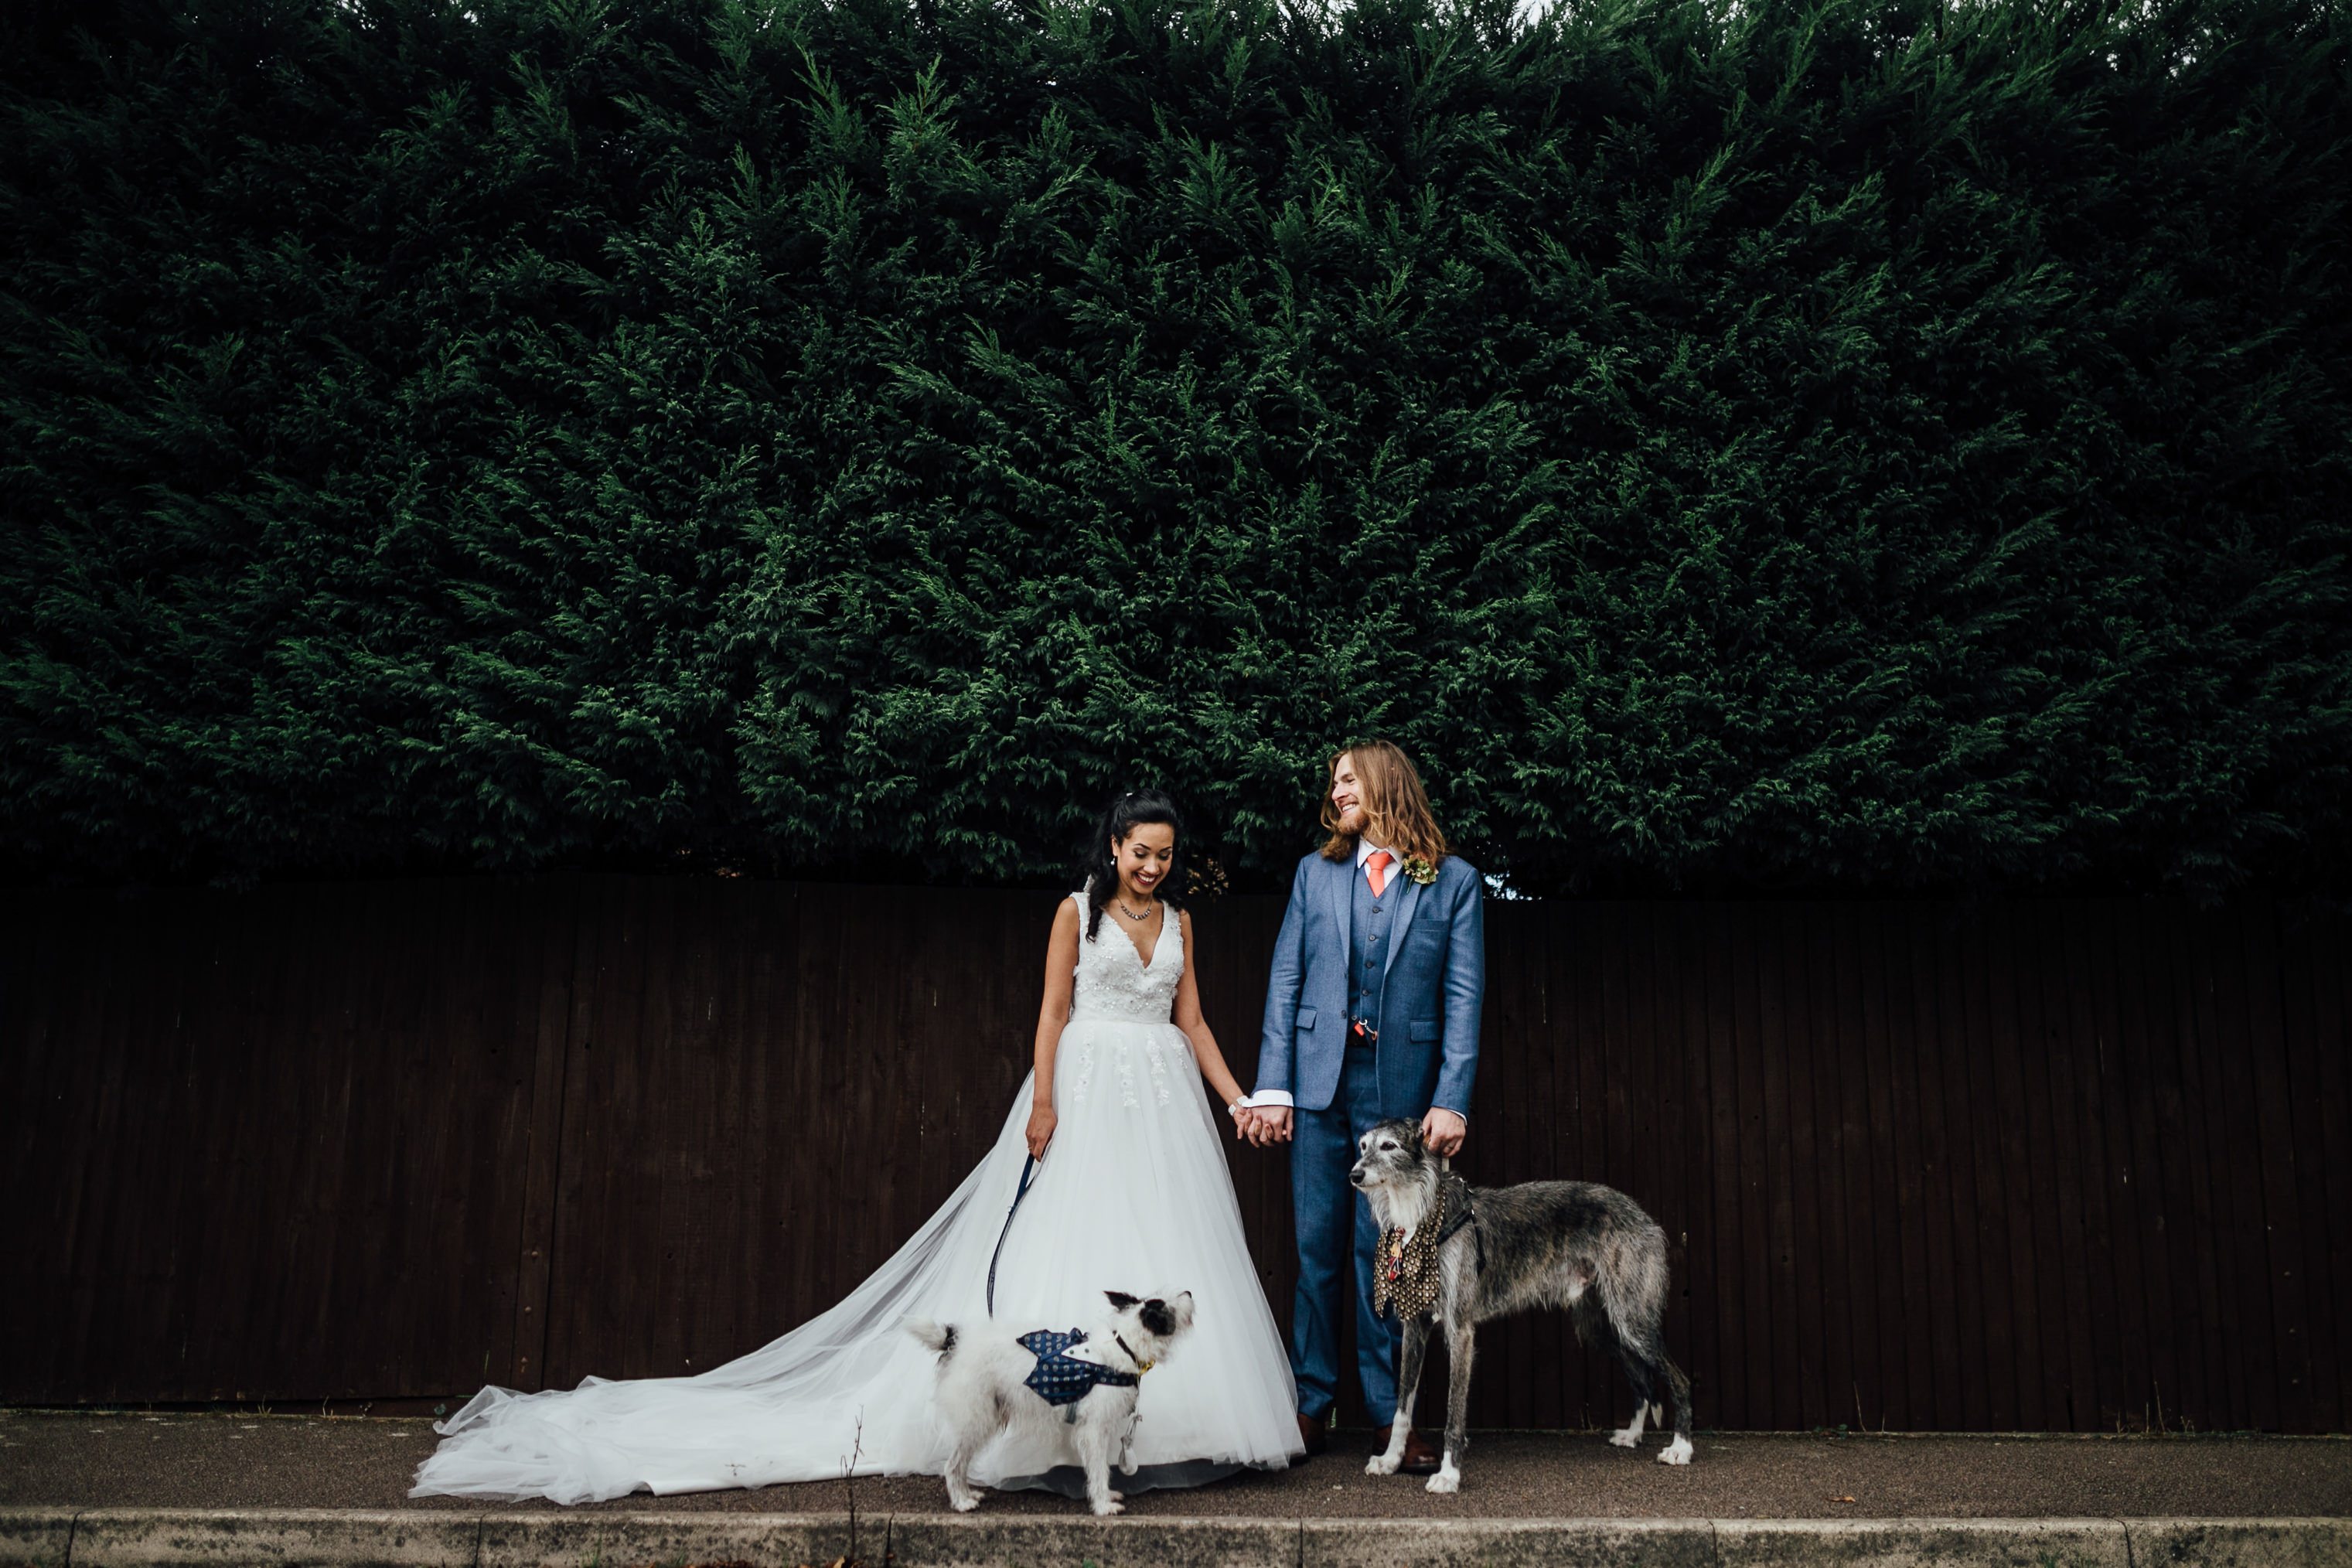 fun wedding photographs autumn wedding london with dogs